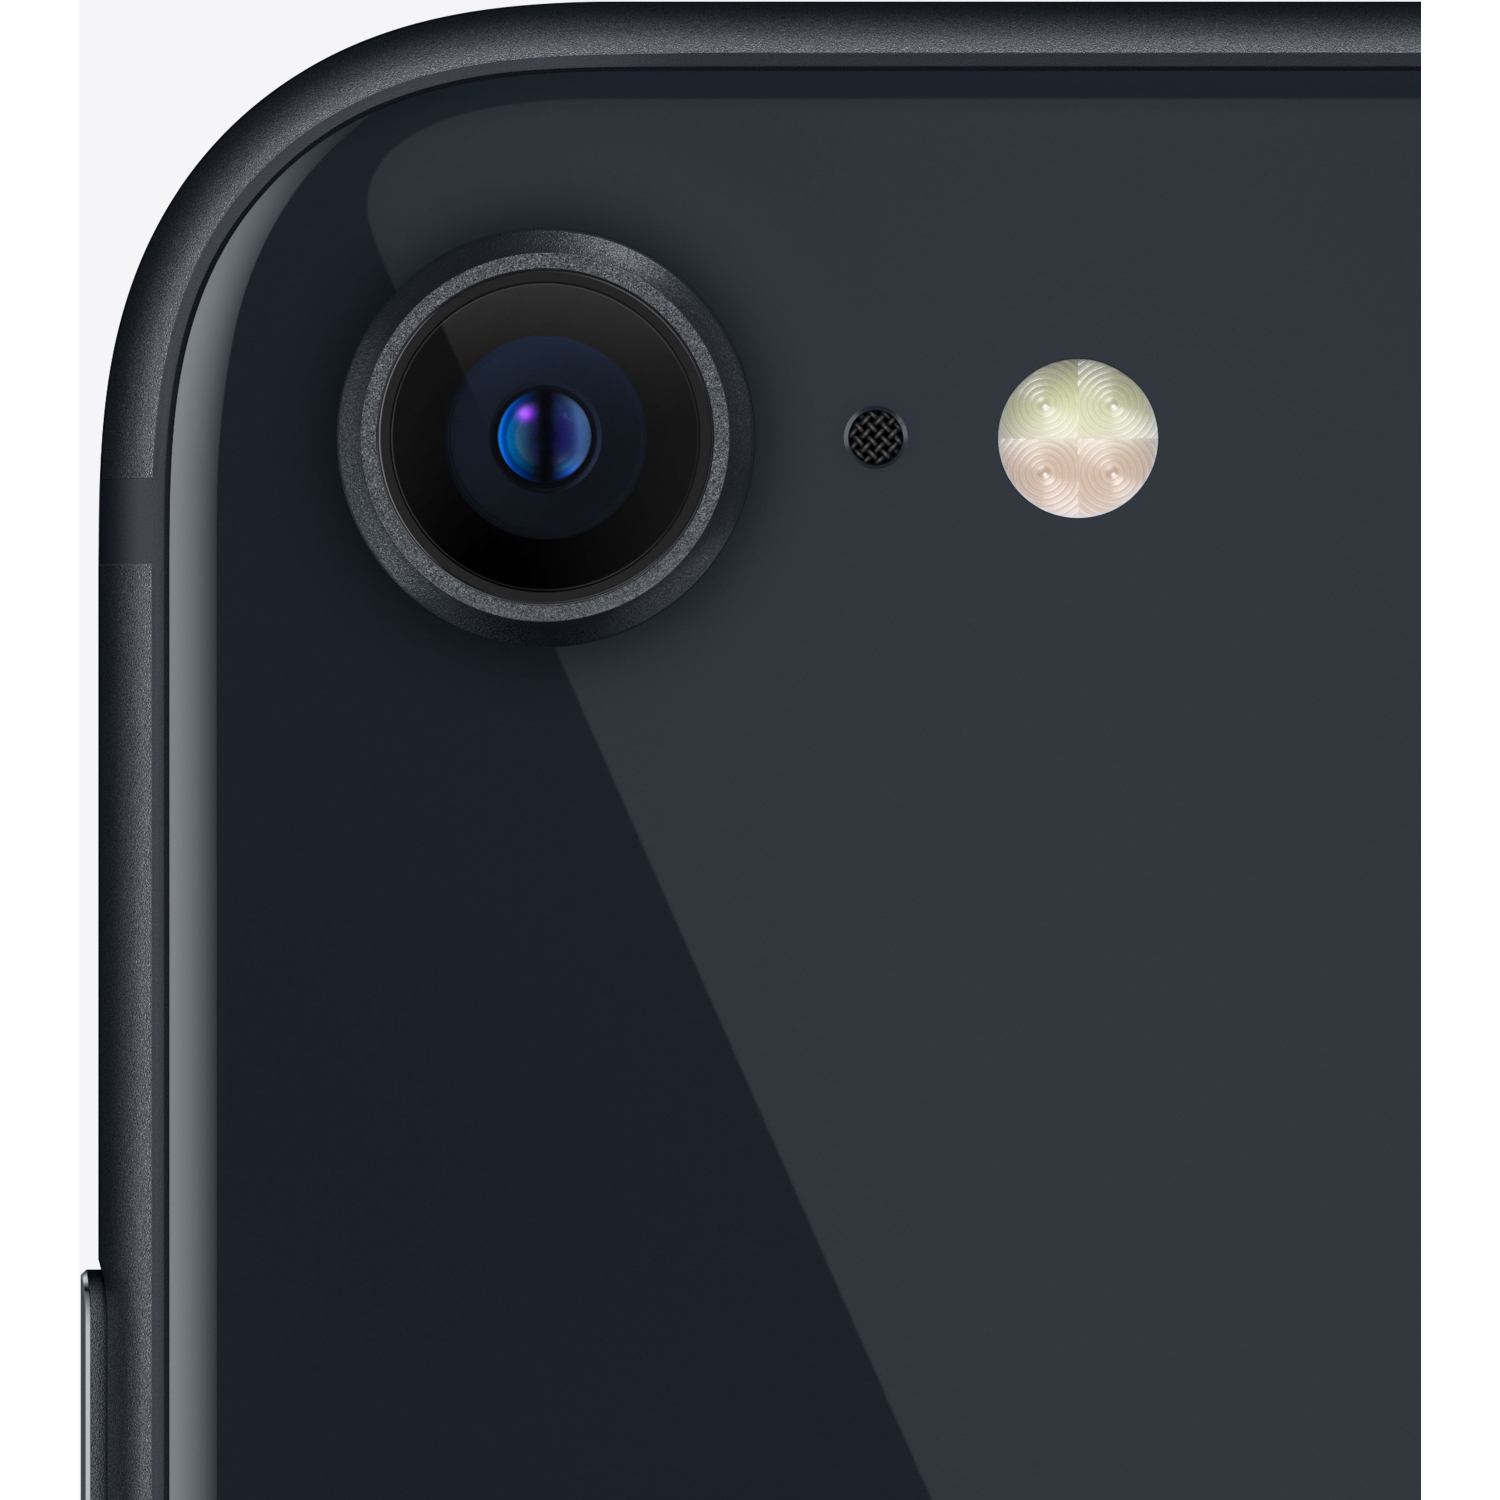 Apple iPhone SE 64GB (3rd Generation) - Midnight - Unlocked - New